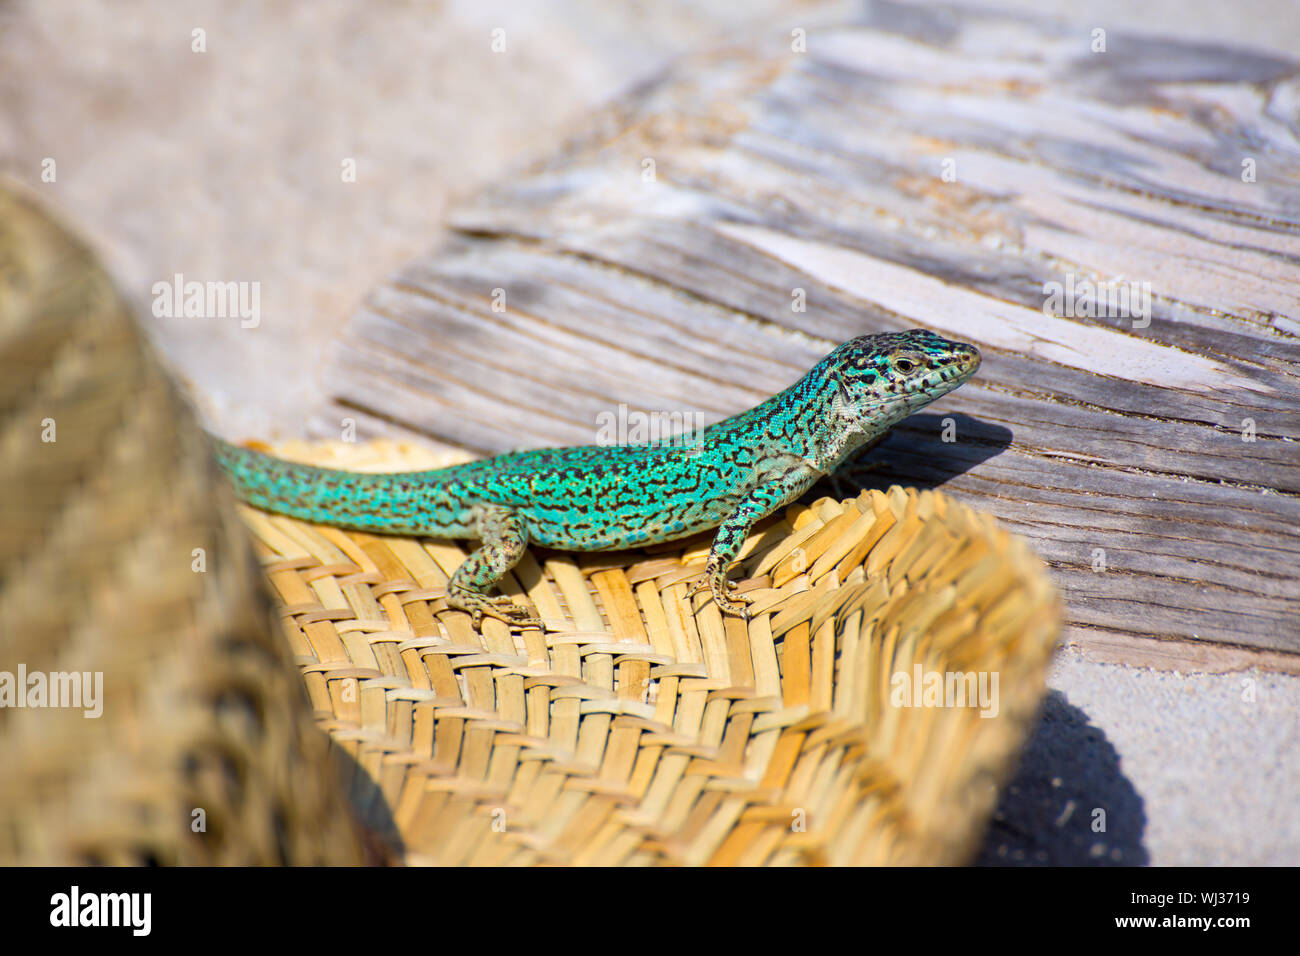 Formentera lizard Podarcis pityusensis formenterae in a tourist beach hat Stock Photo